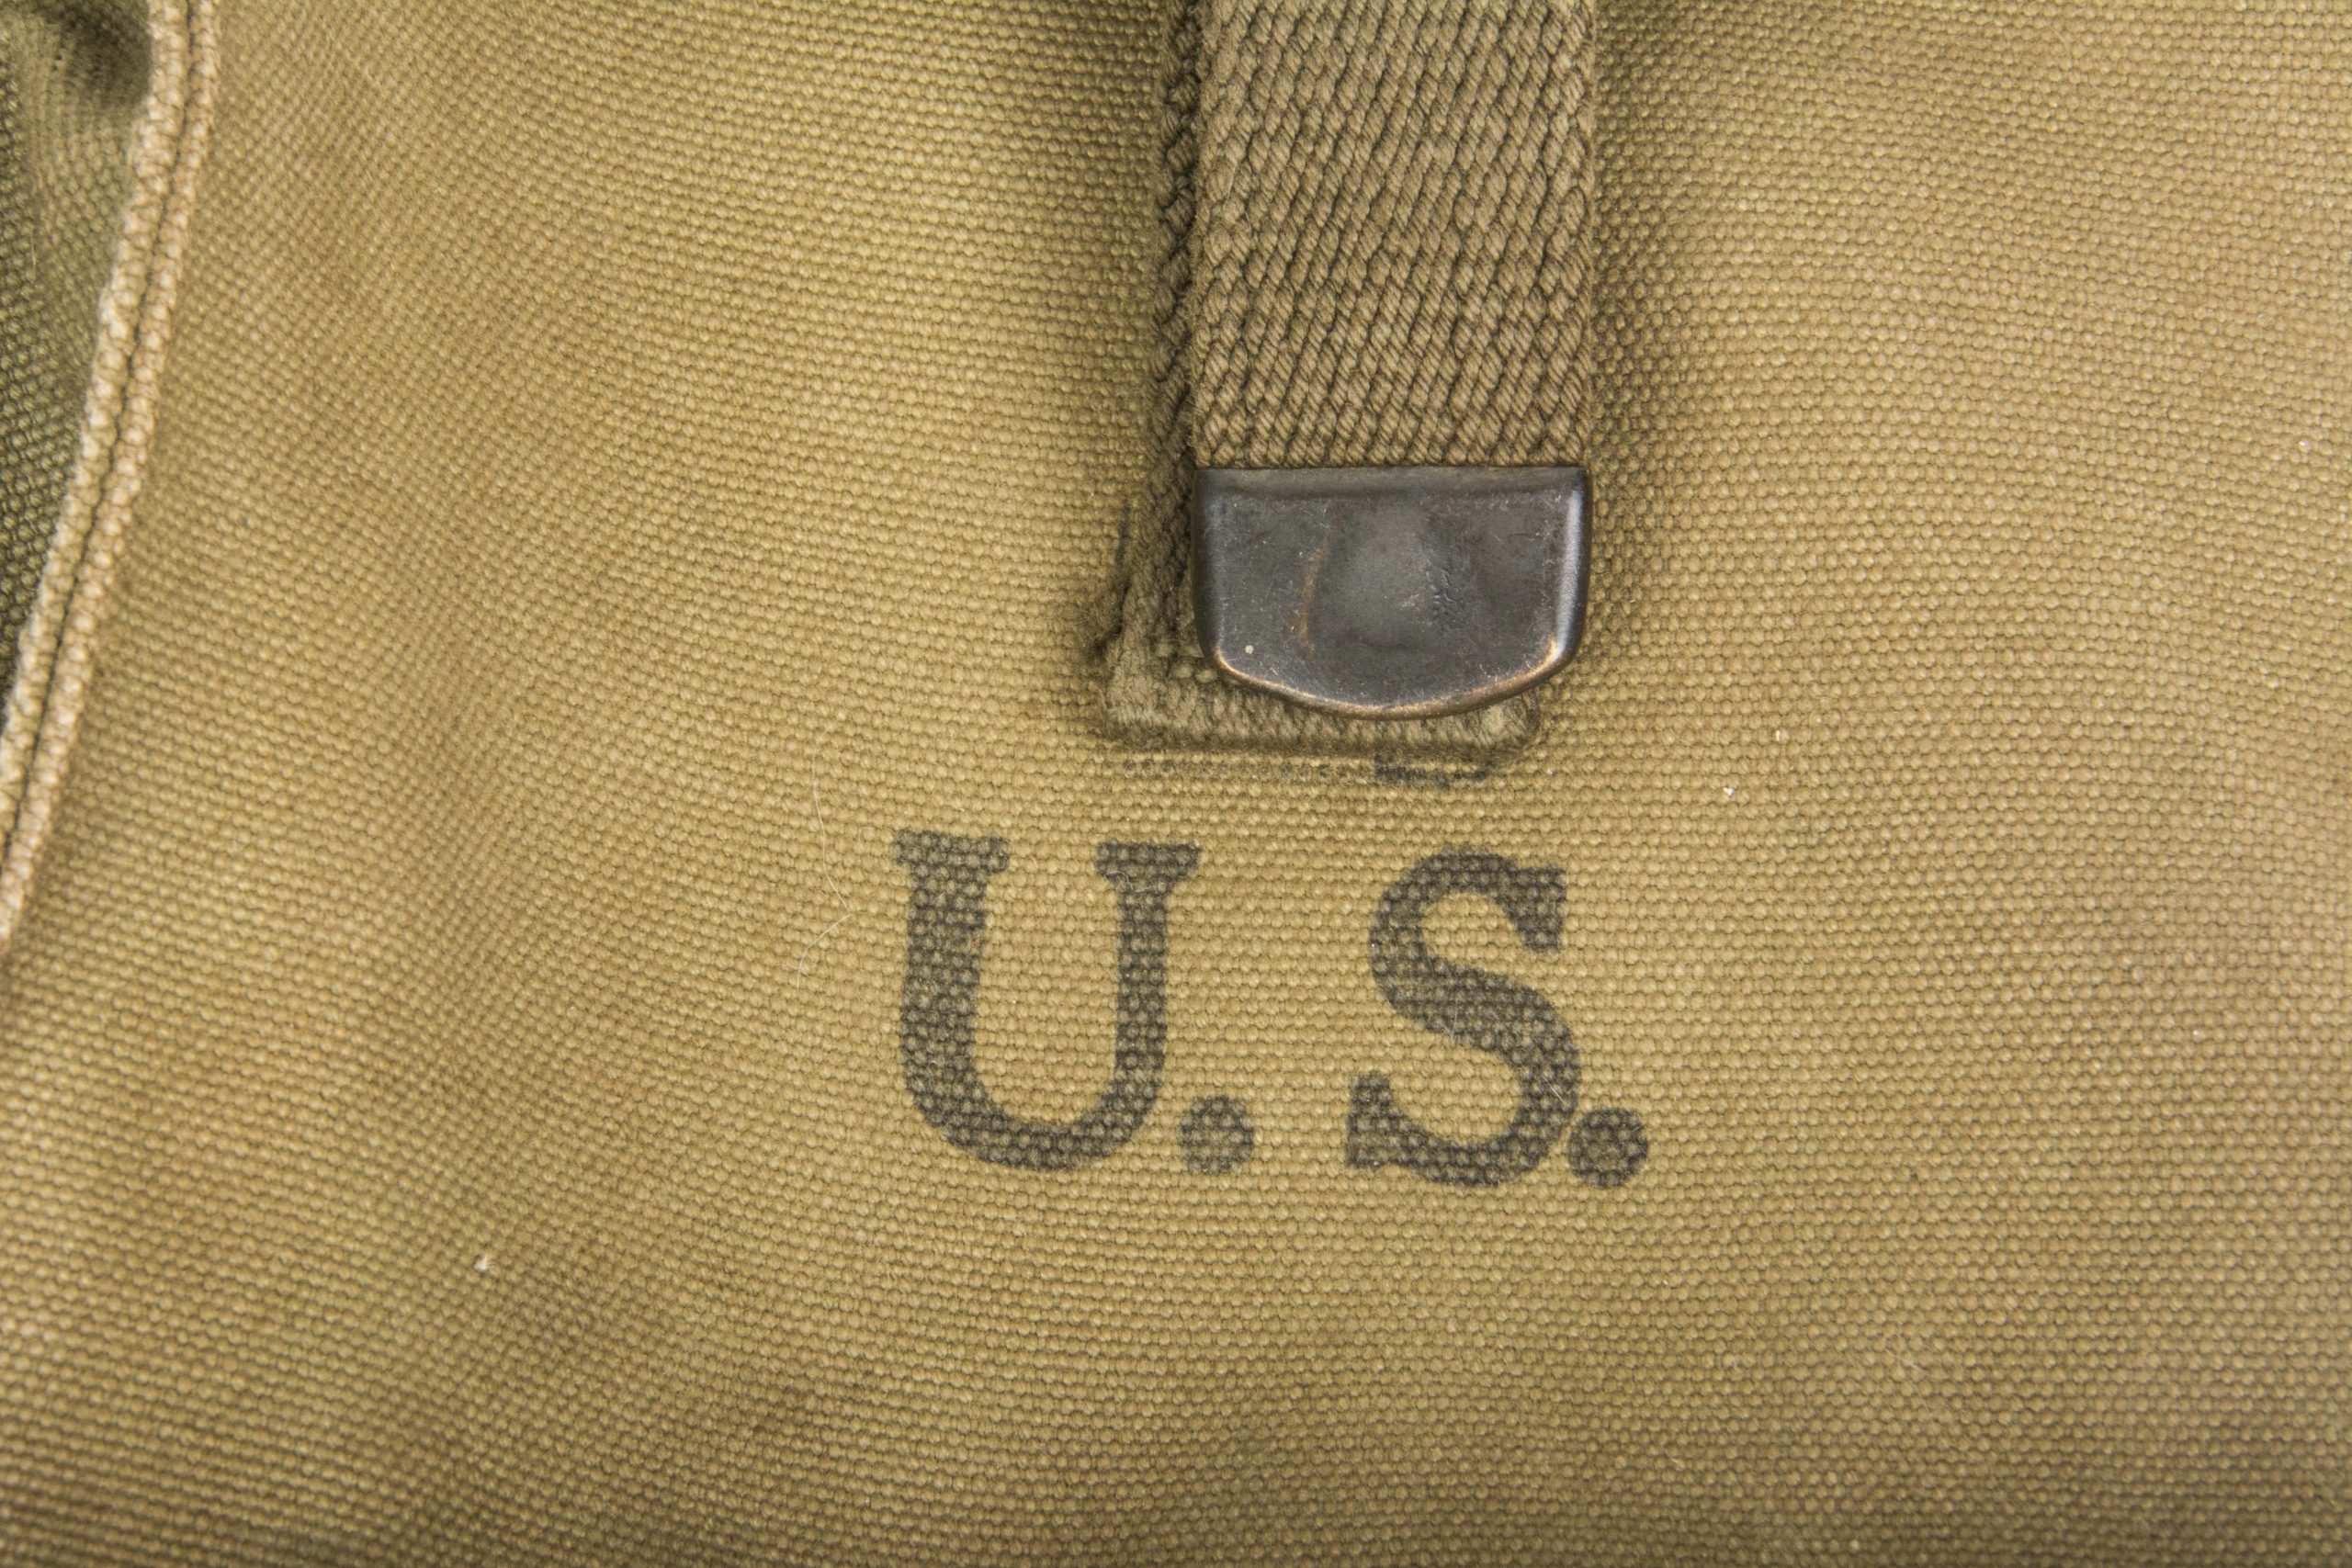 General purpose ammo bag marked B.B.S.Co 1944 – fjm44